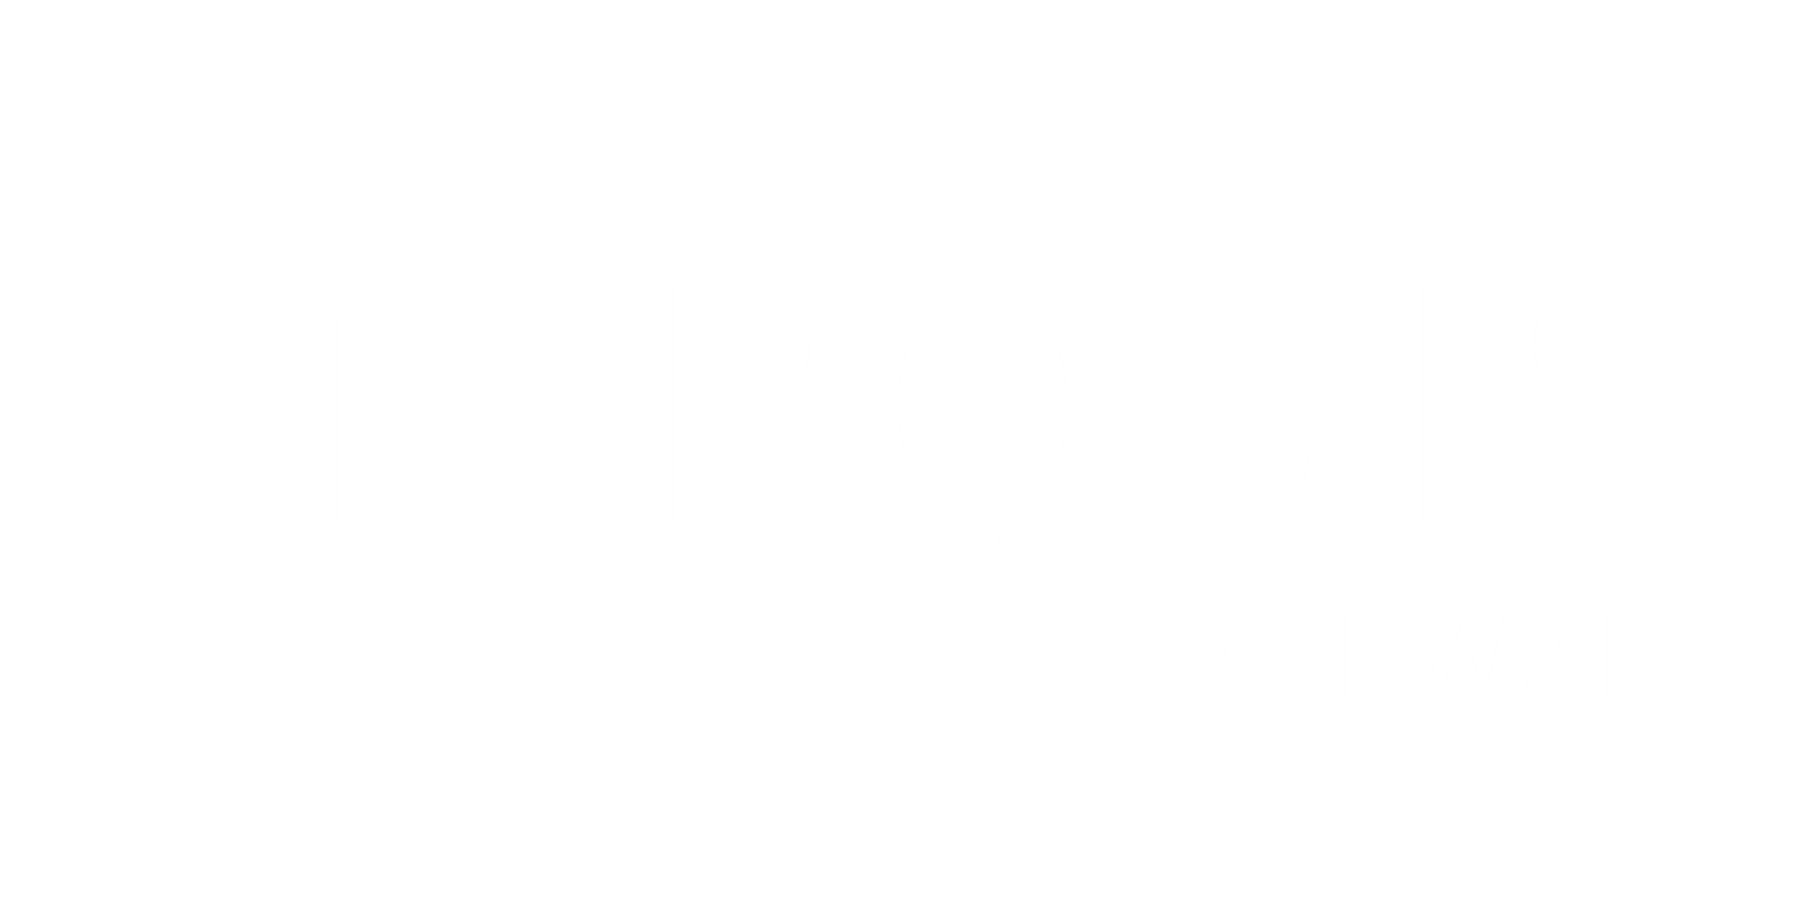 Marquis Rockwall white logo.